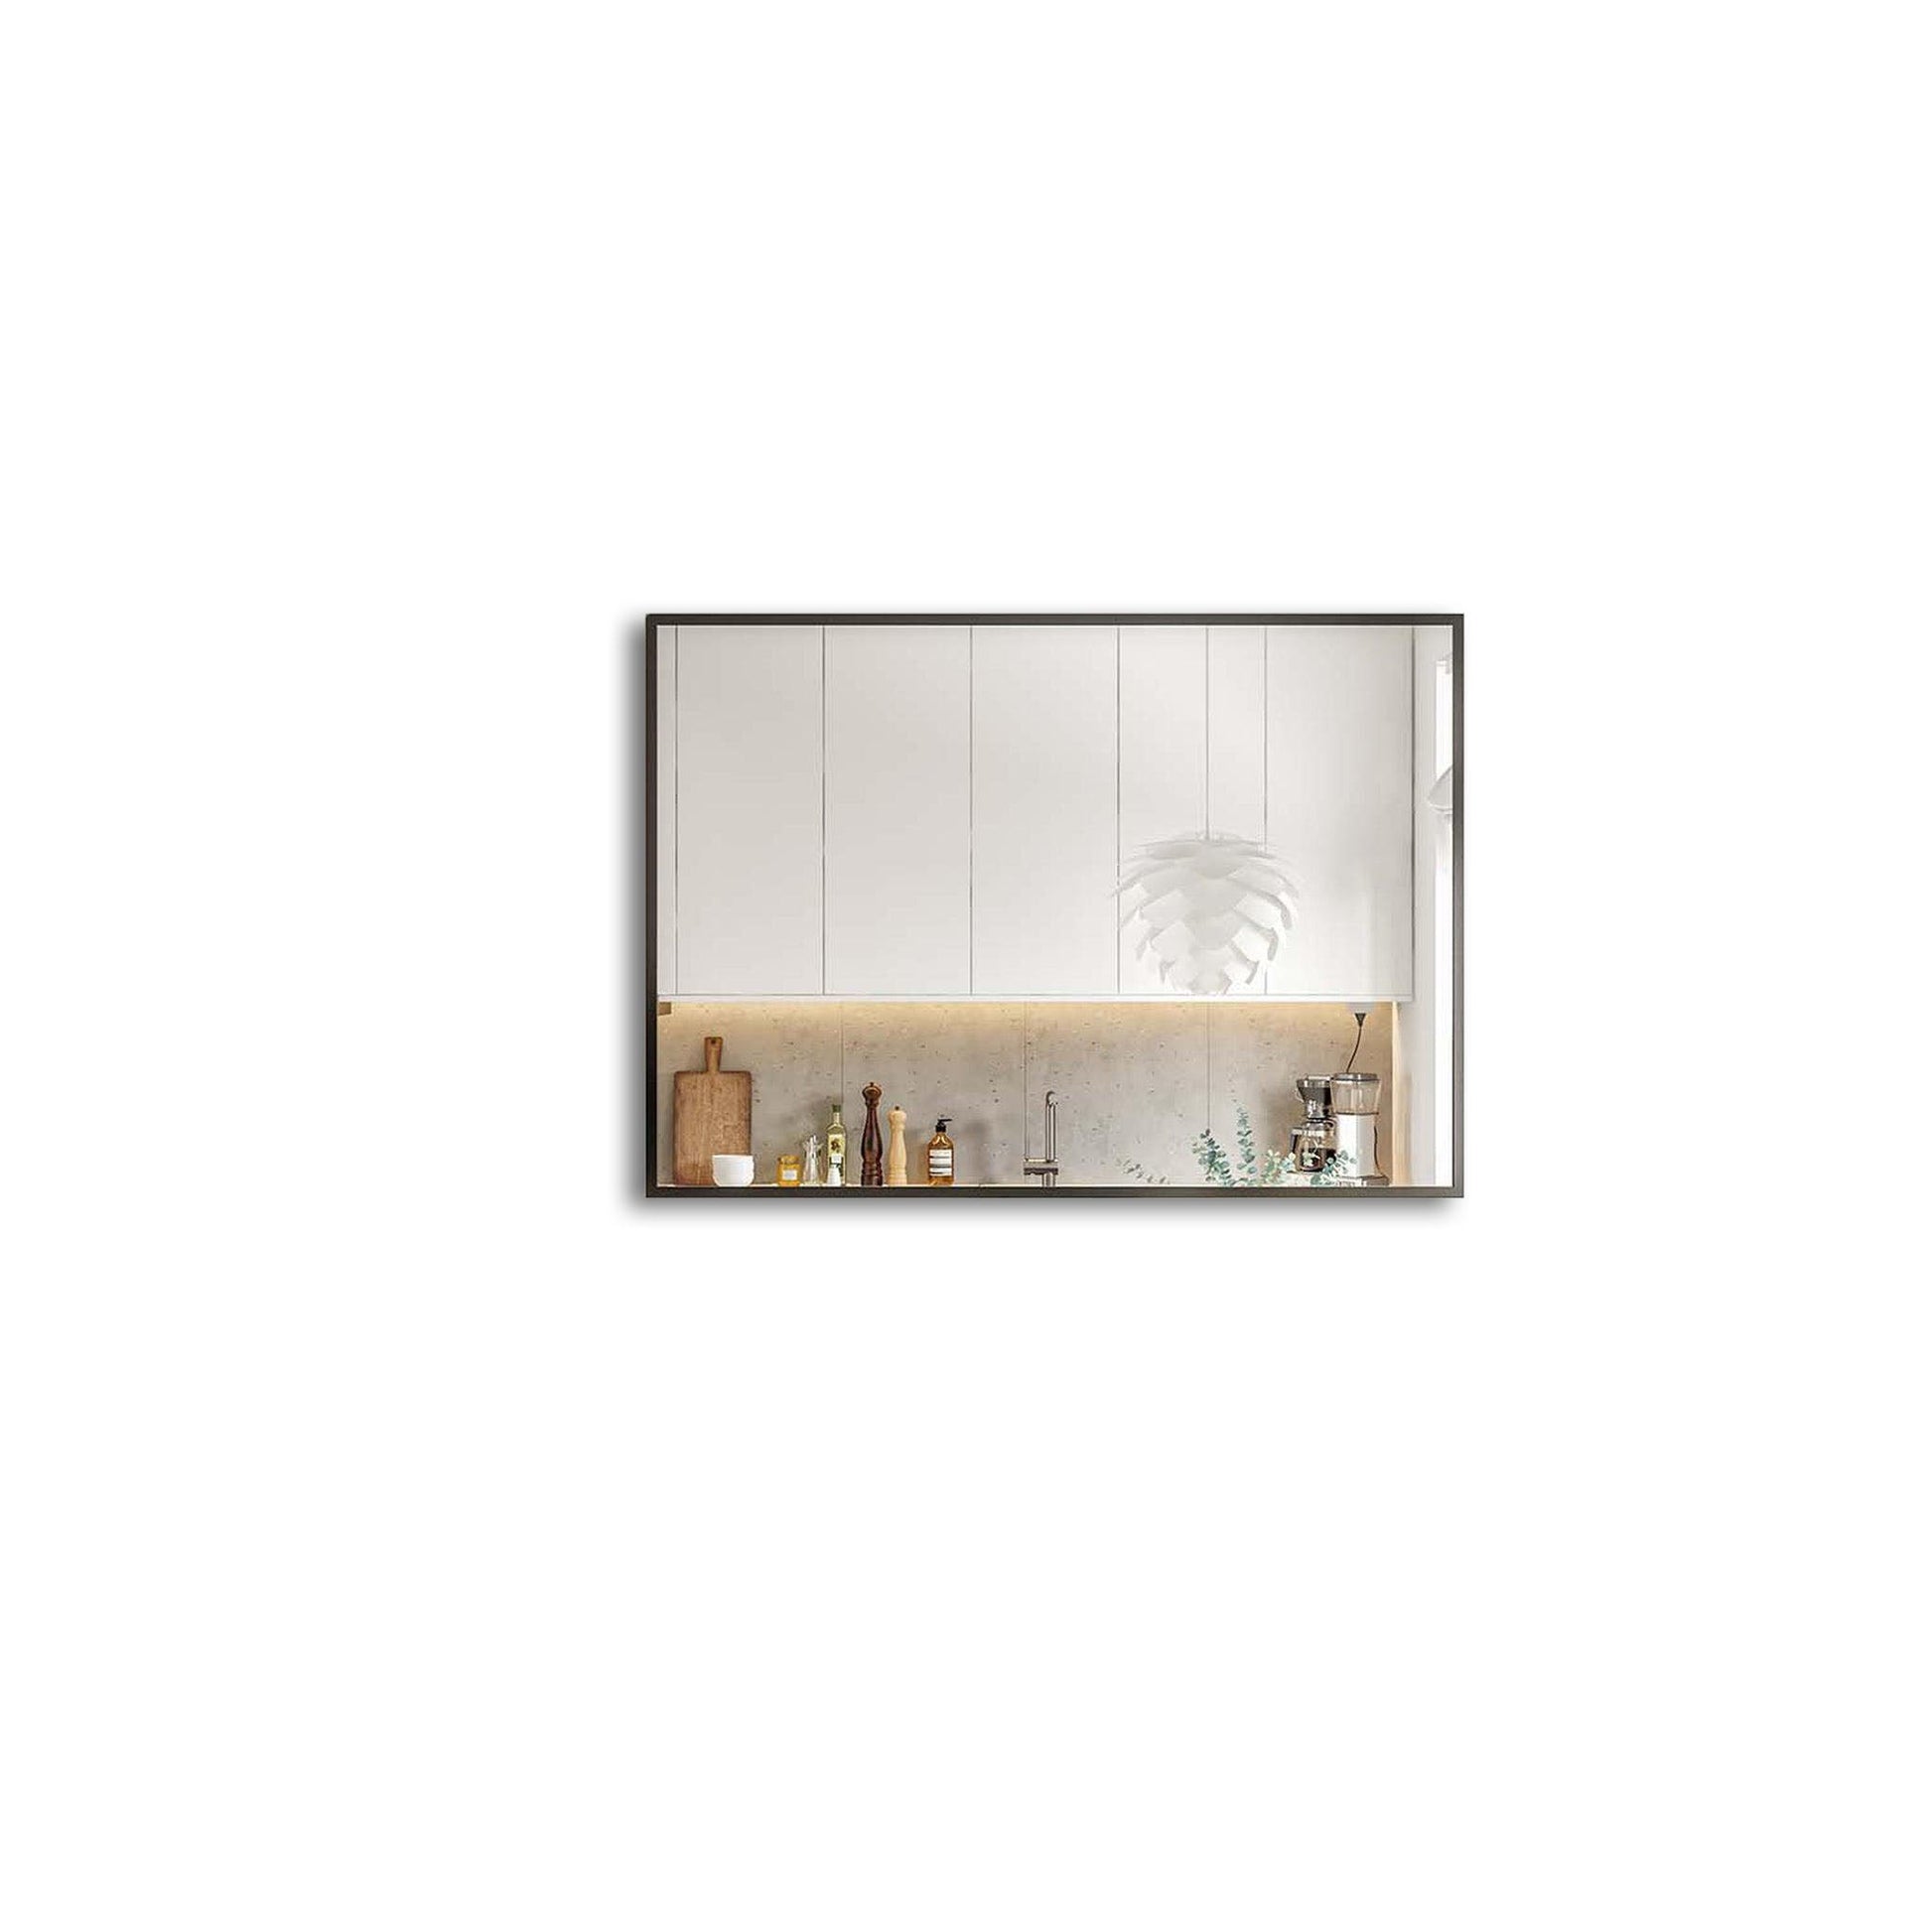 Eviva Modern 48" x 30" Black Framed Bathroom Wall-Mounted Mirror